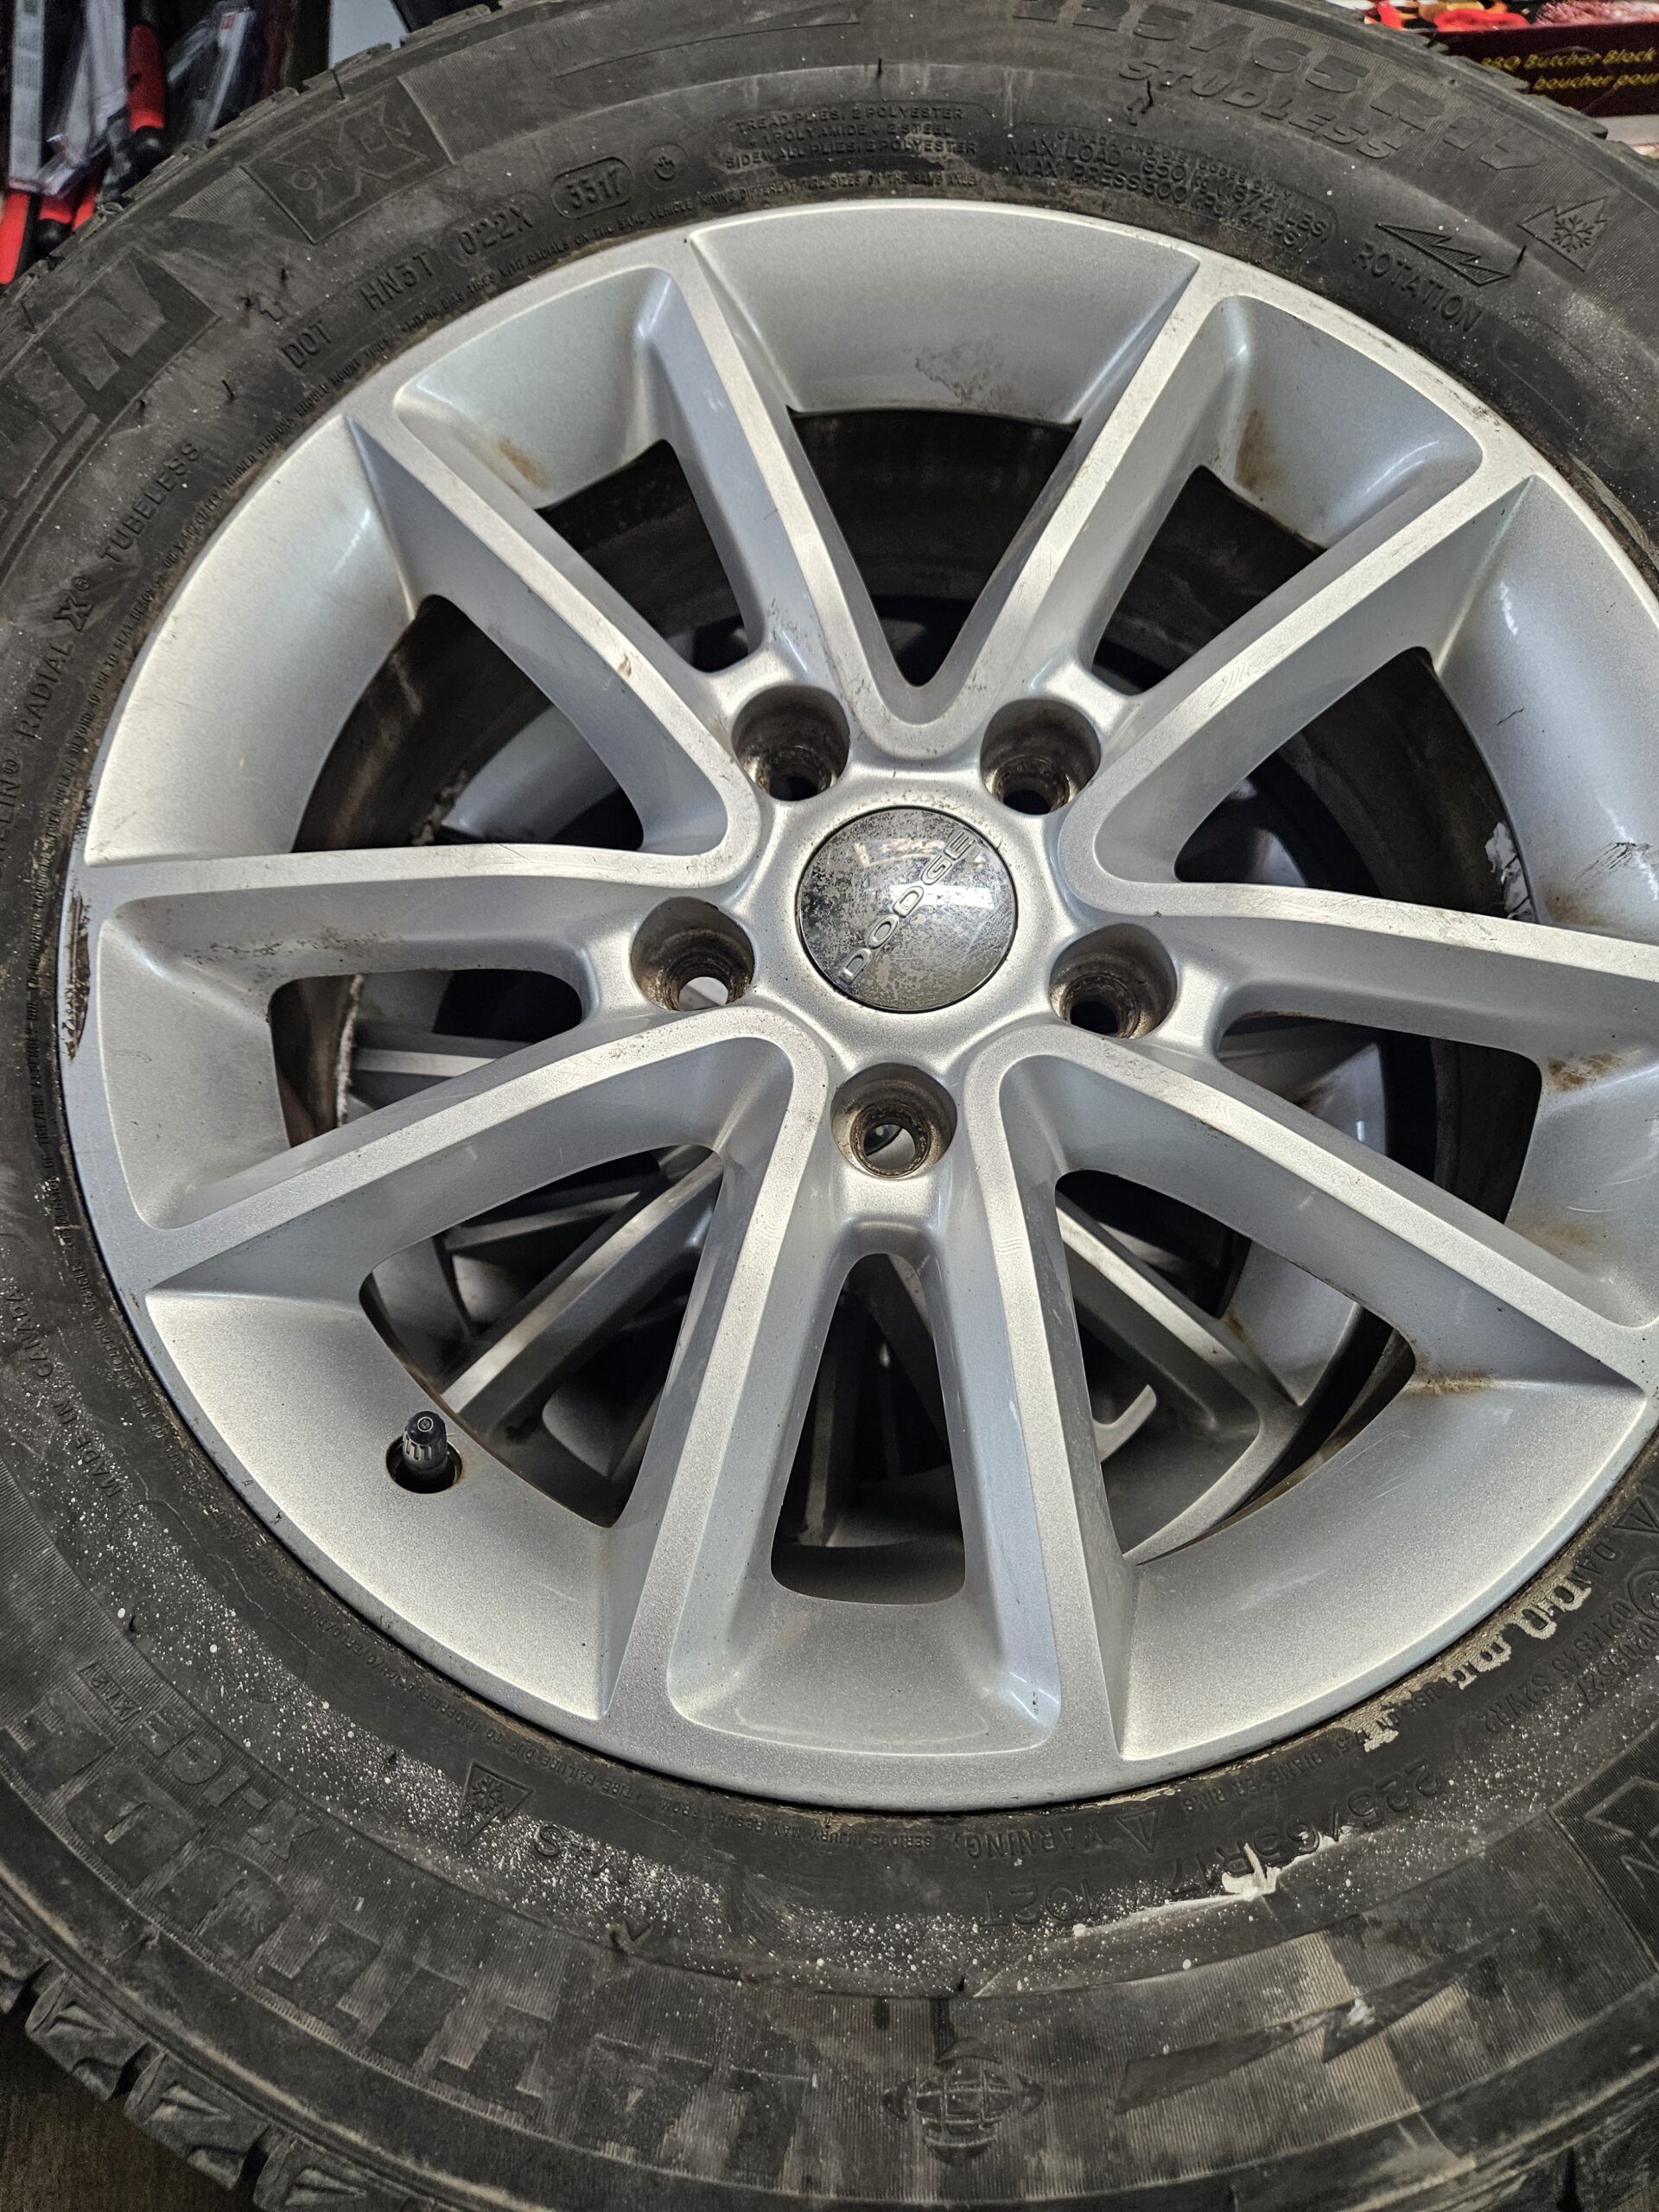 225/65R17 Michelin Snow Tires on Dodge Caravan Rims